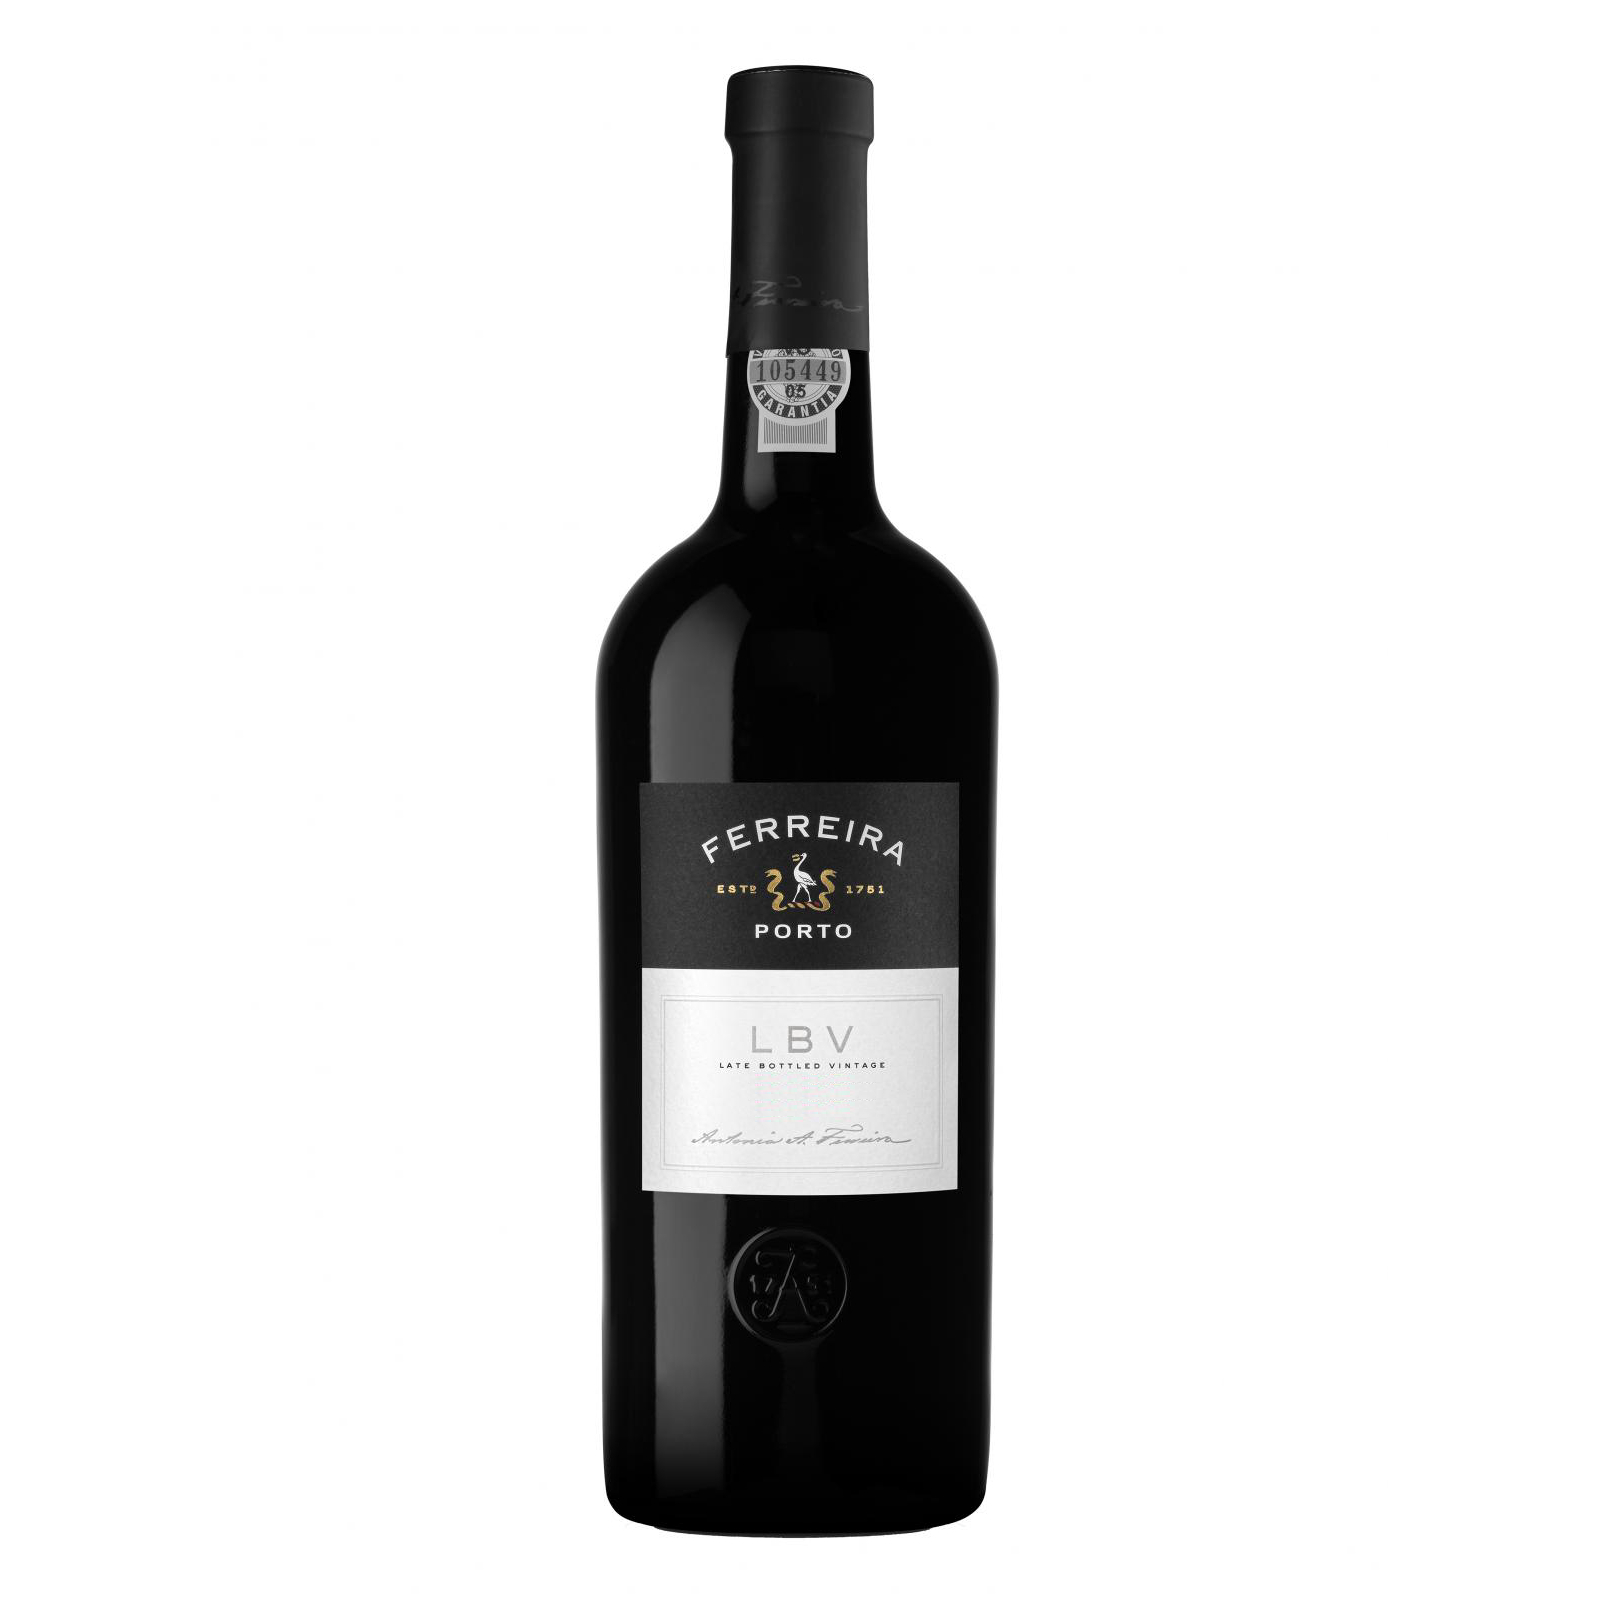 Ferreira Late Bottled Vintage Porto Port Wine 750ml – Portugal